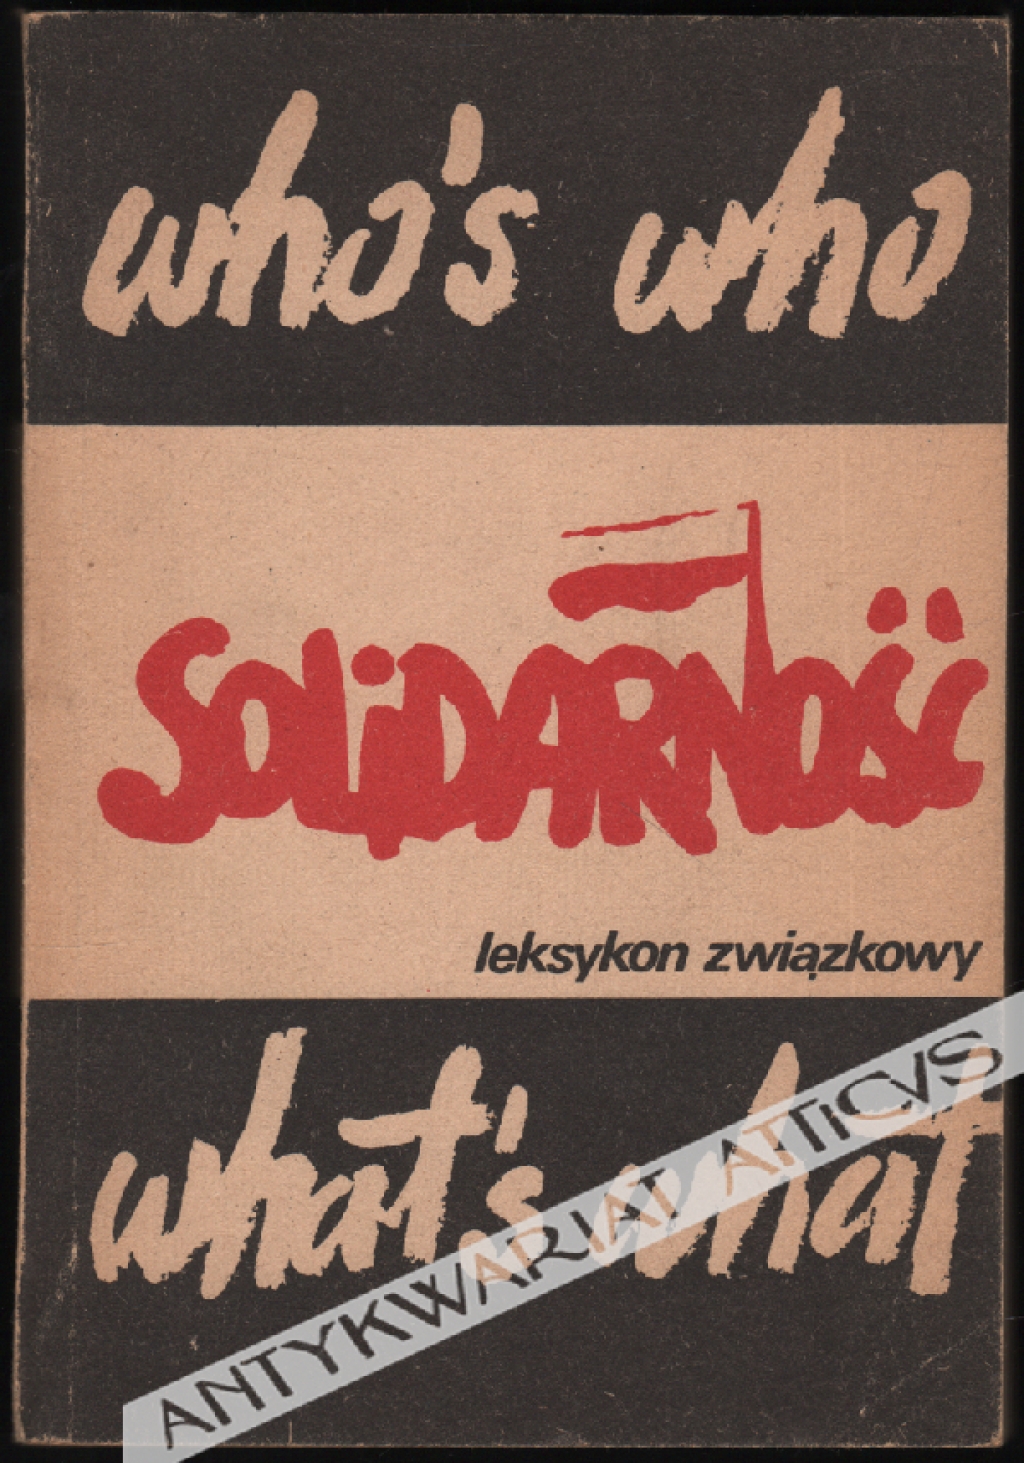 Who's who, what's what in Solidarność. Leksykon związkowy